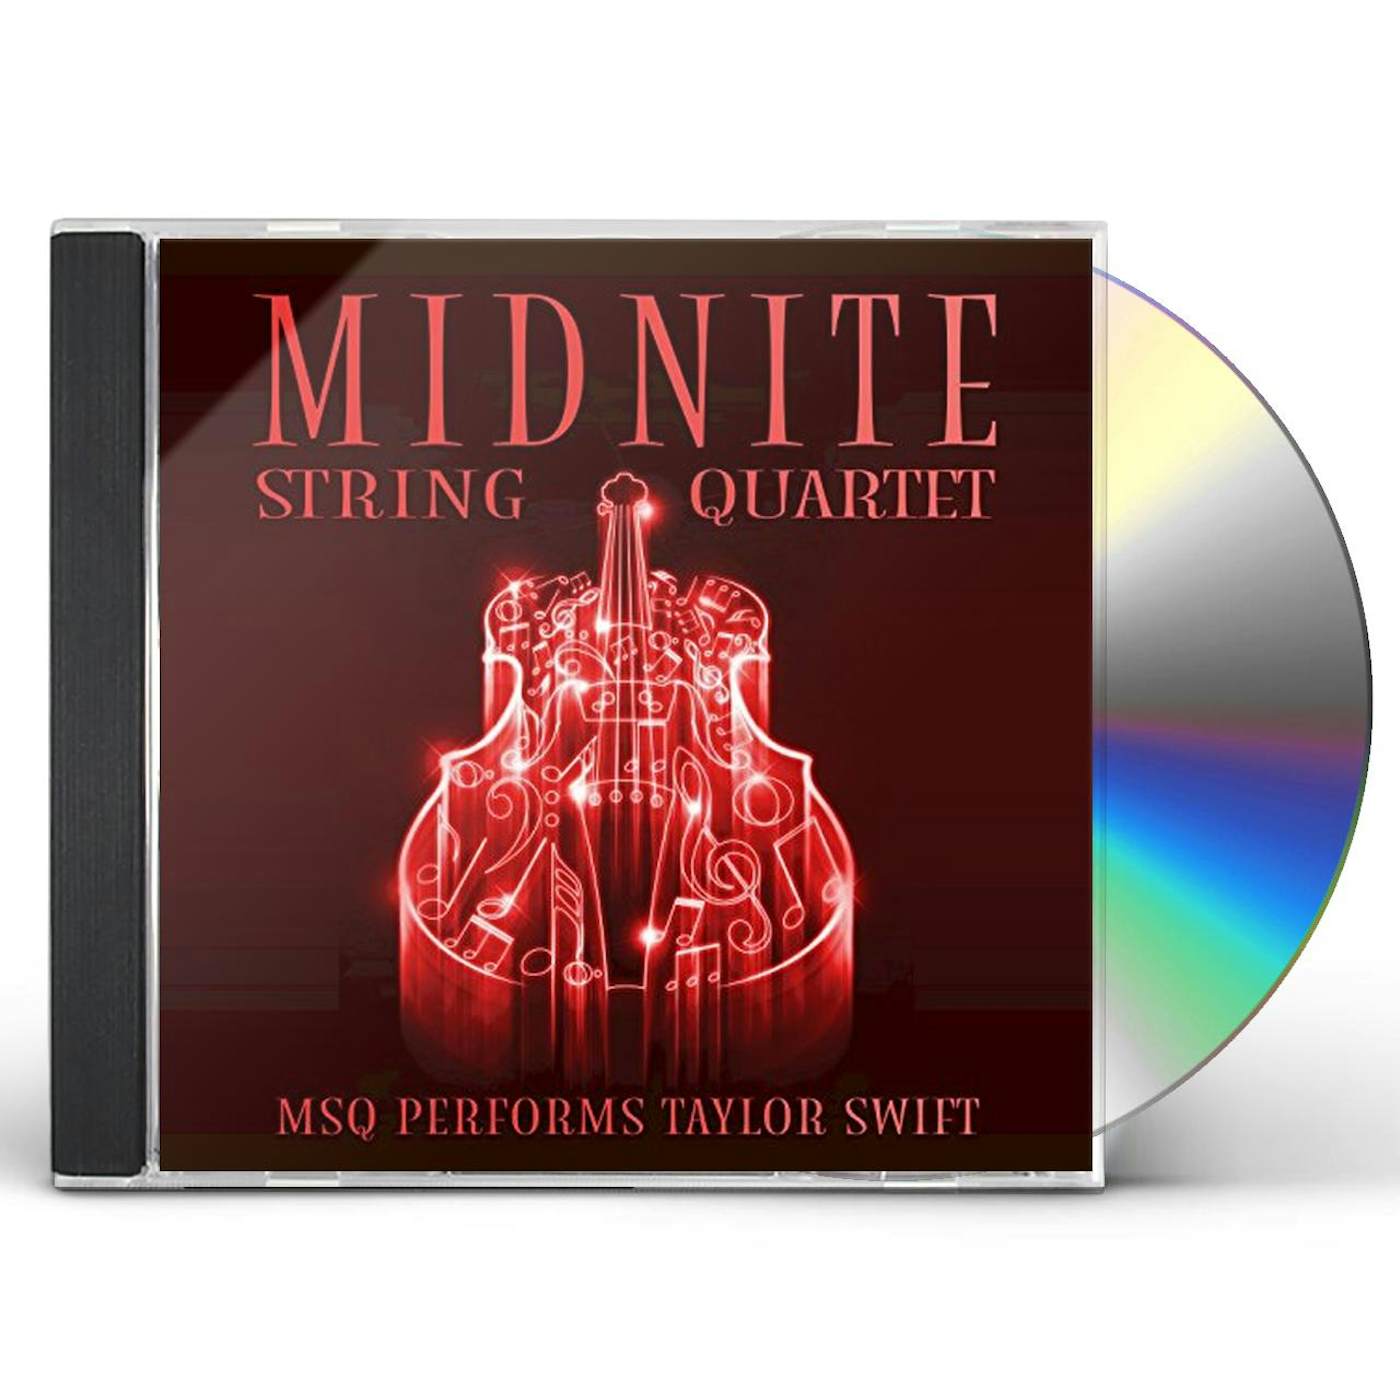 Midnite String Quartet MSQ PERFORMS TAYLOR SWIFT CD